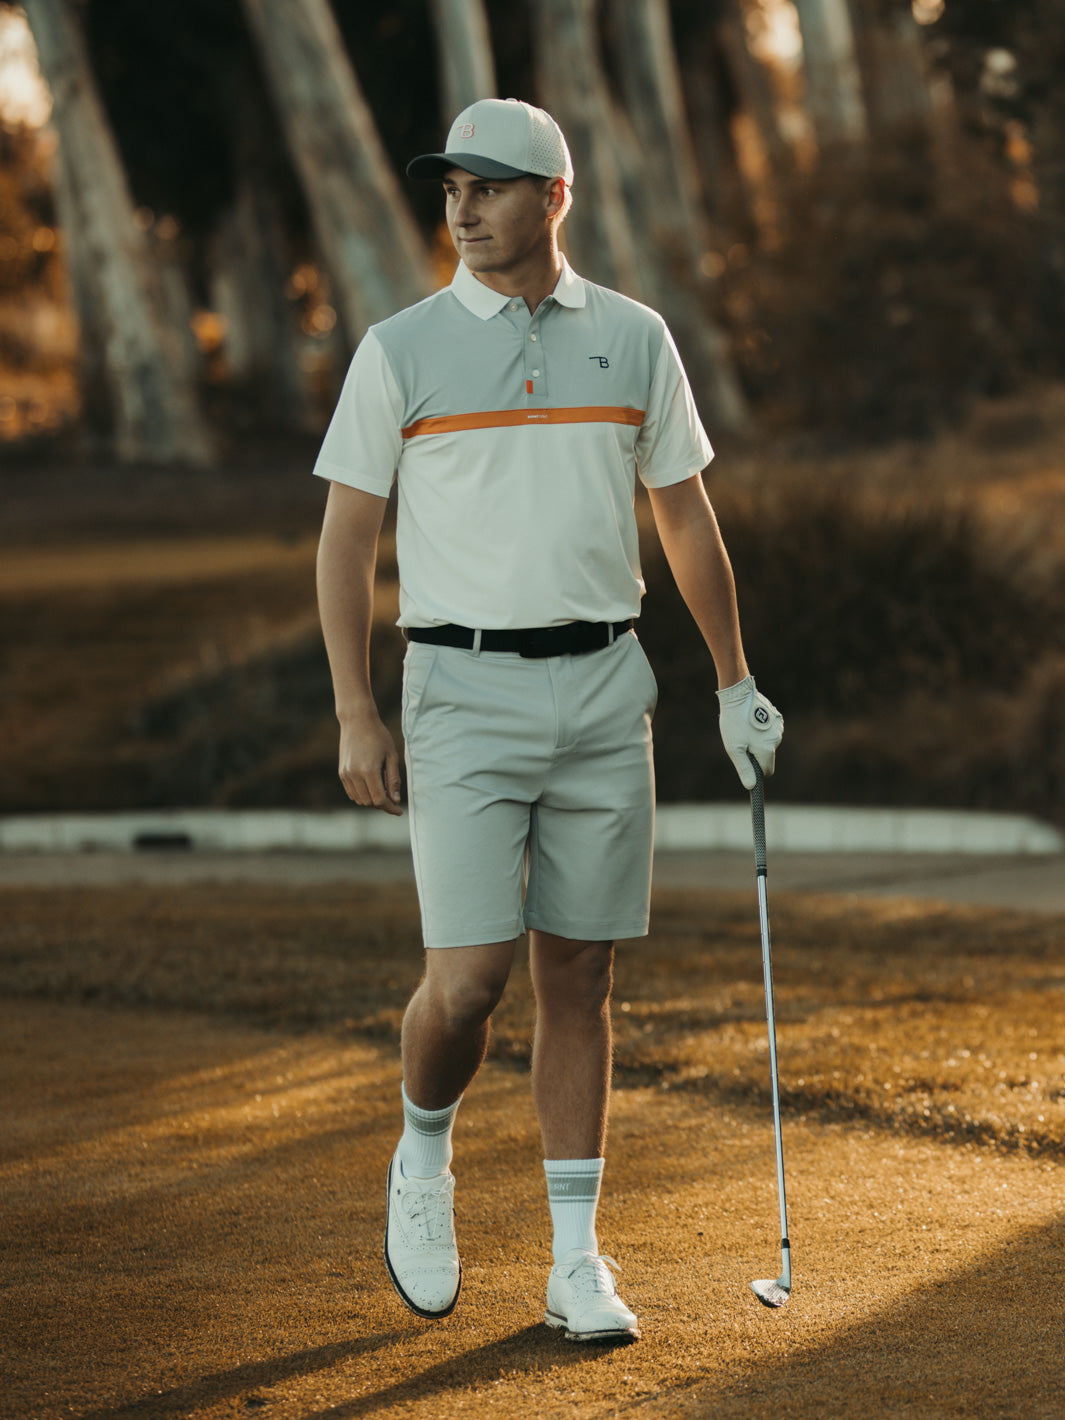 Men's Golf Shorts in Grey